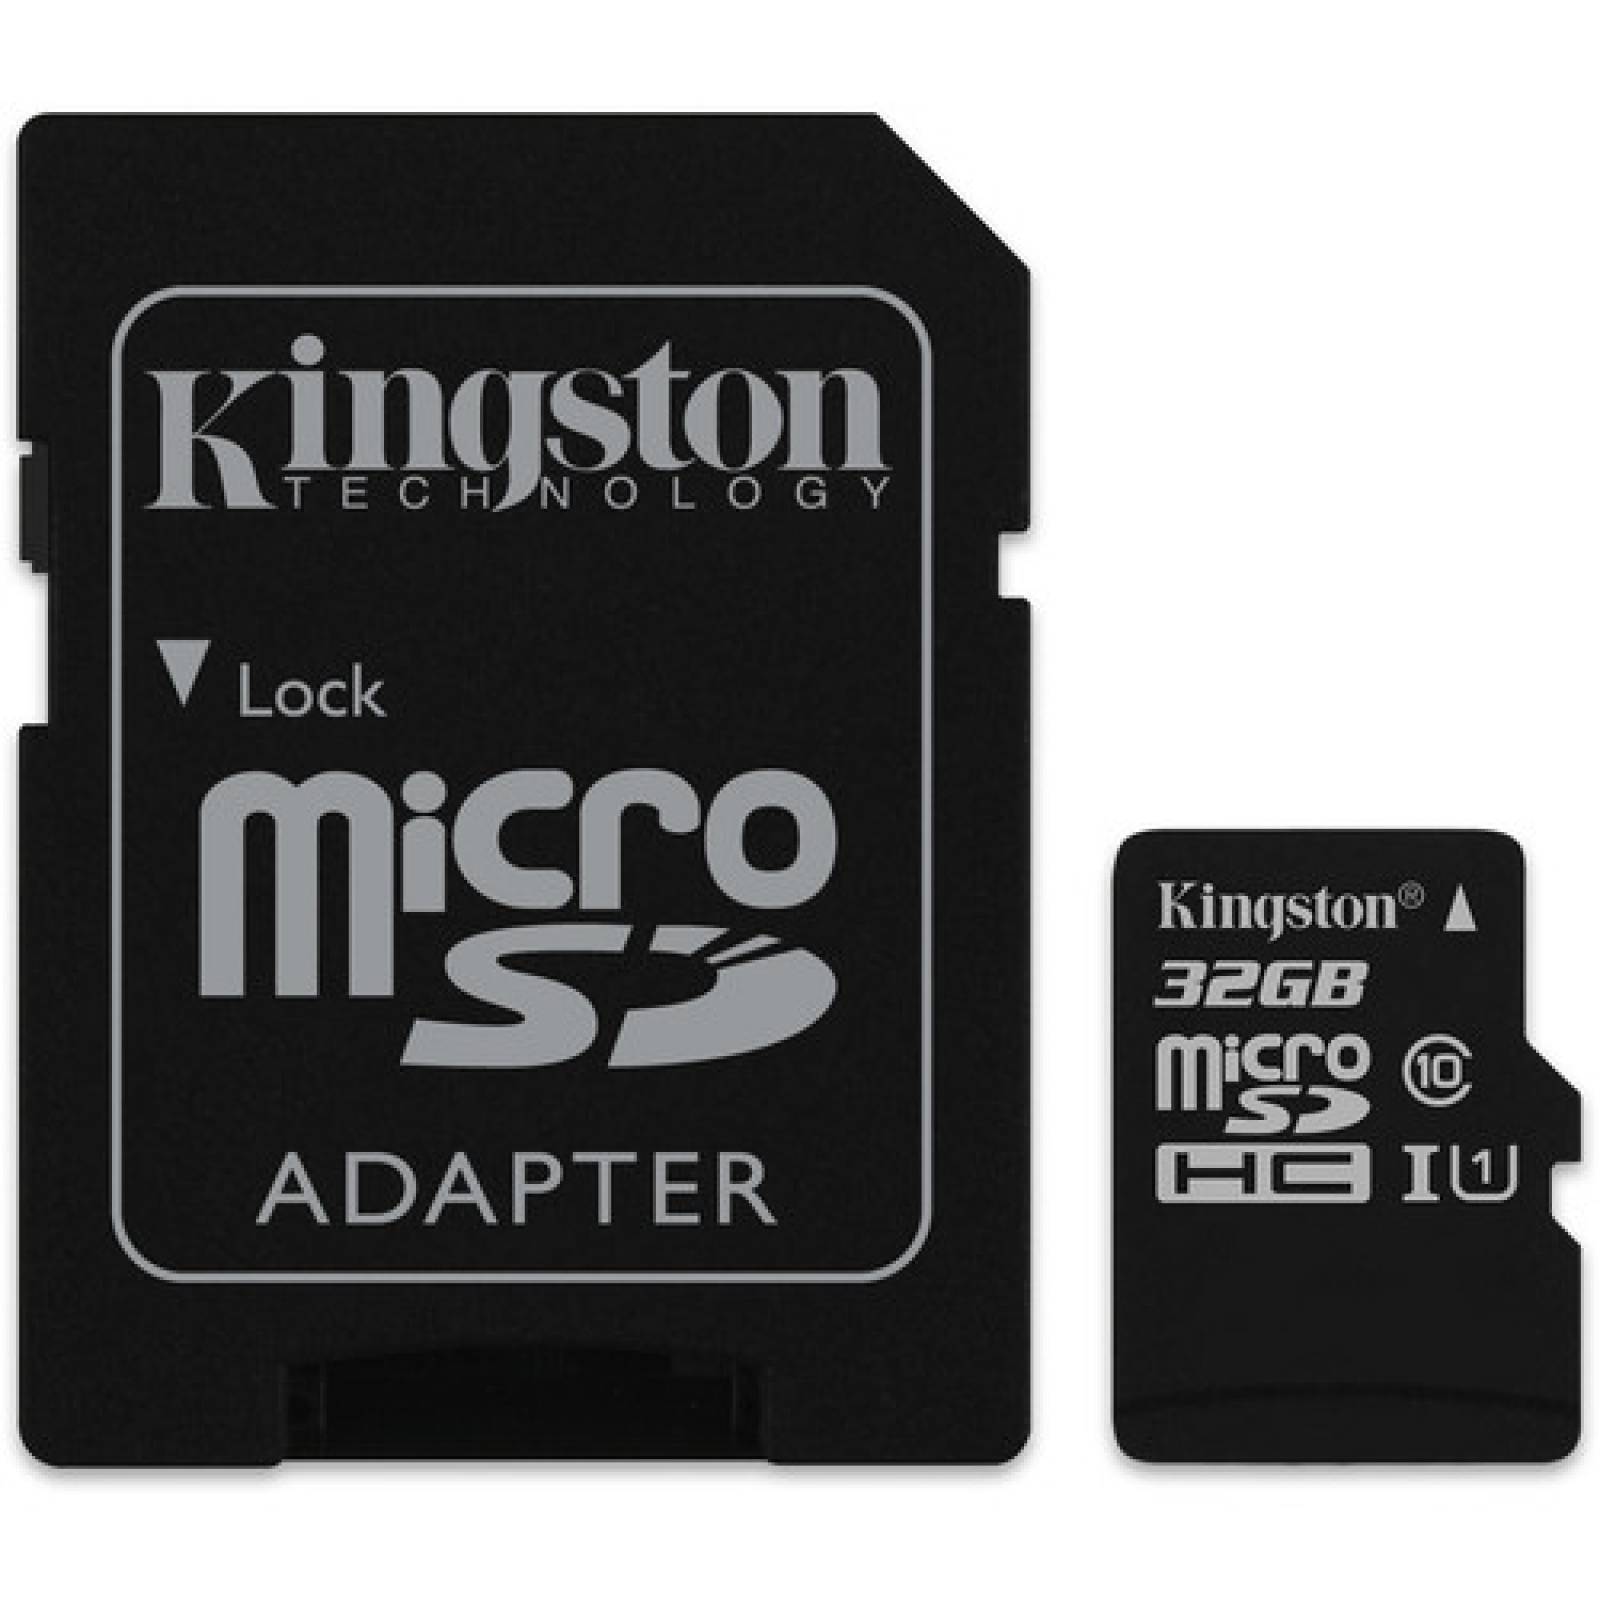 Memoria Micro SDHC 32 GB Canvas Select 80R  Kingston